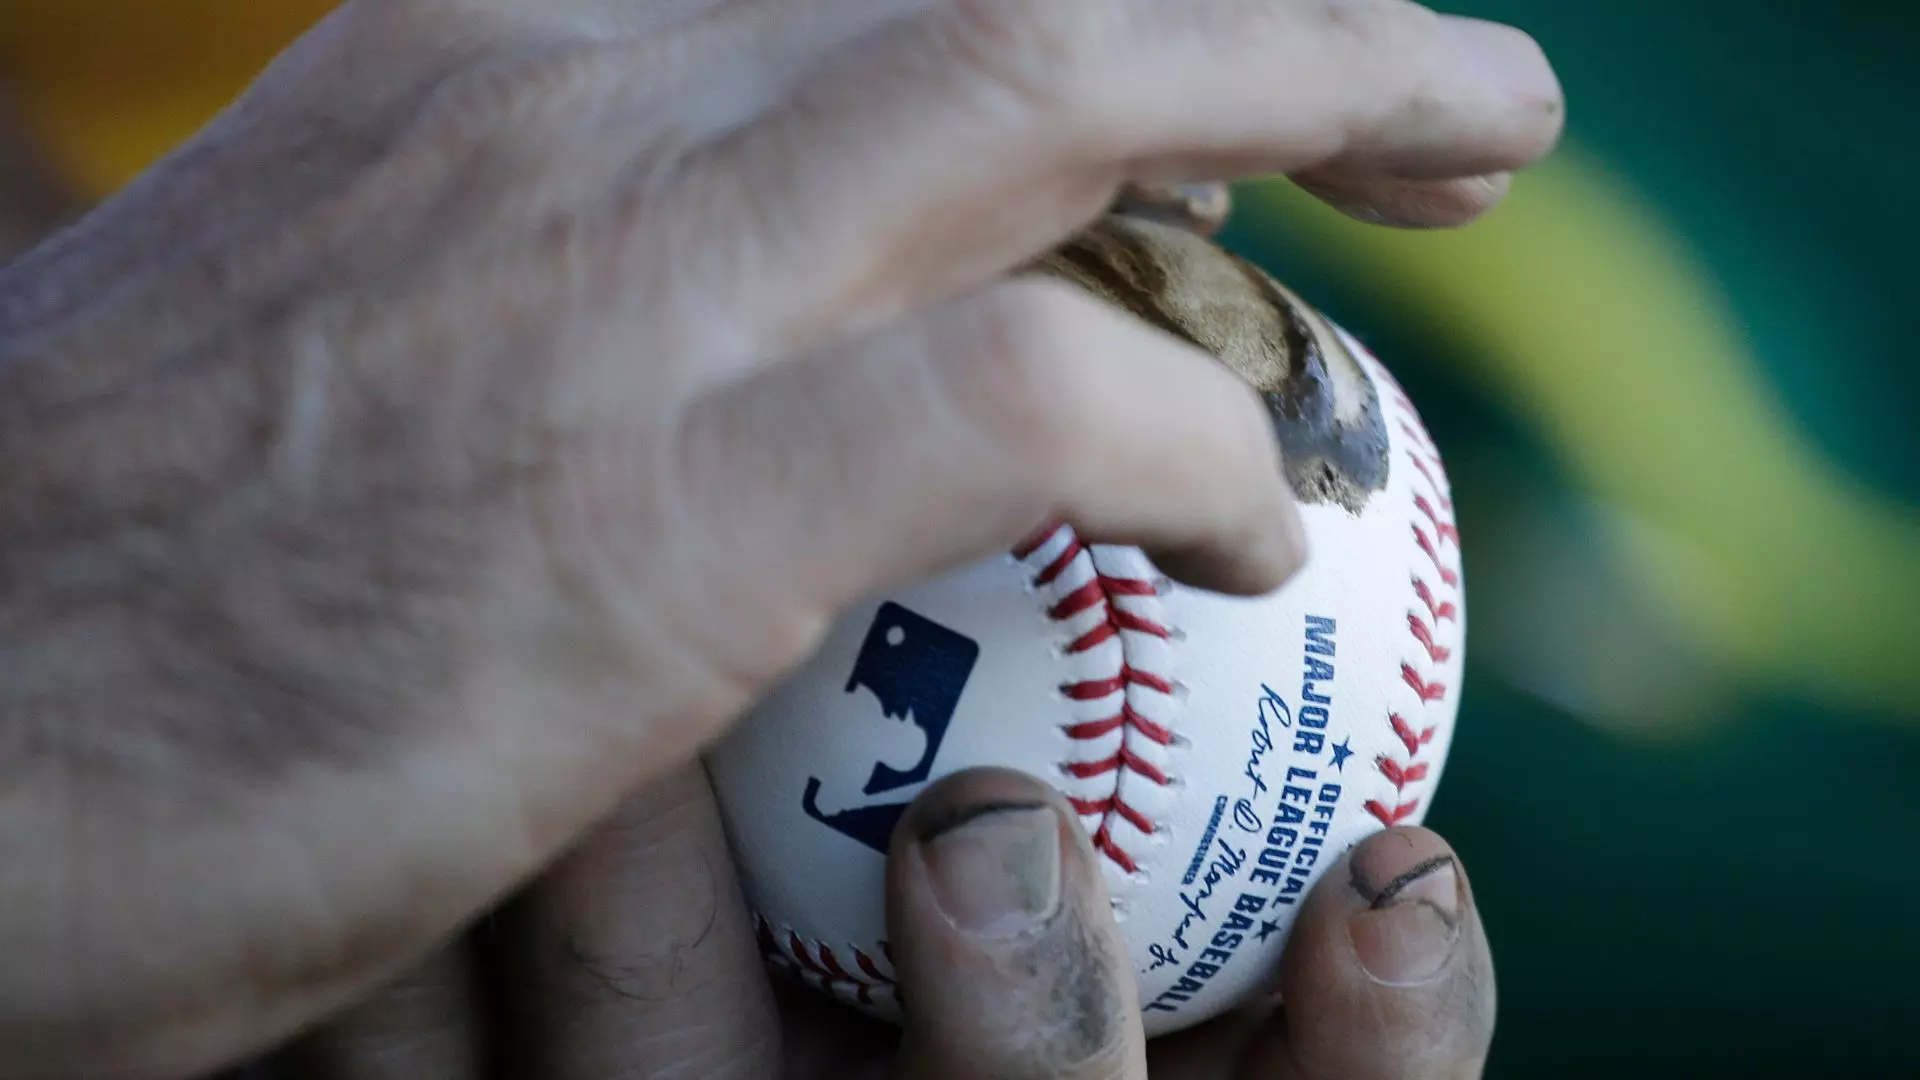 Major League Baseball rubs its balls in Jersey mud